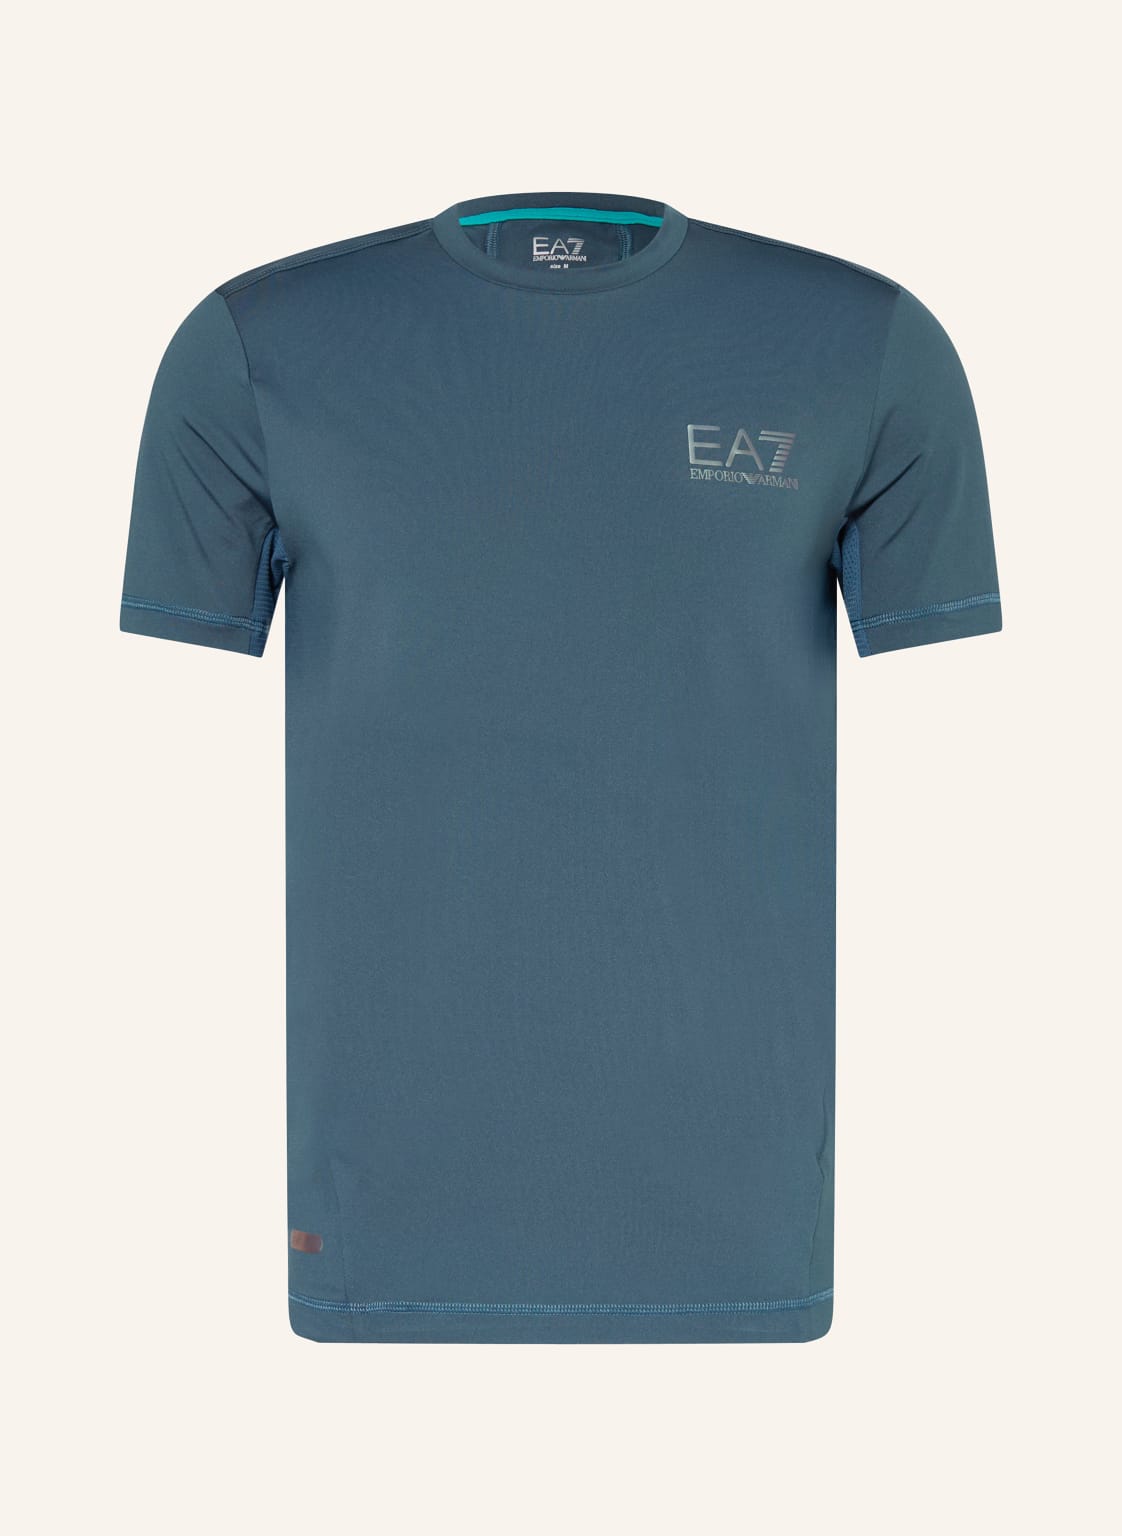 ea7 Emporio Armani T-Shirt blau von EA7 EMPORIO ARMANI